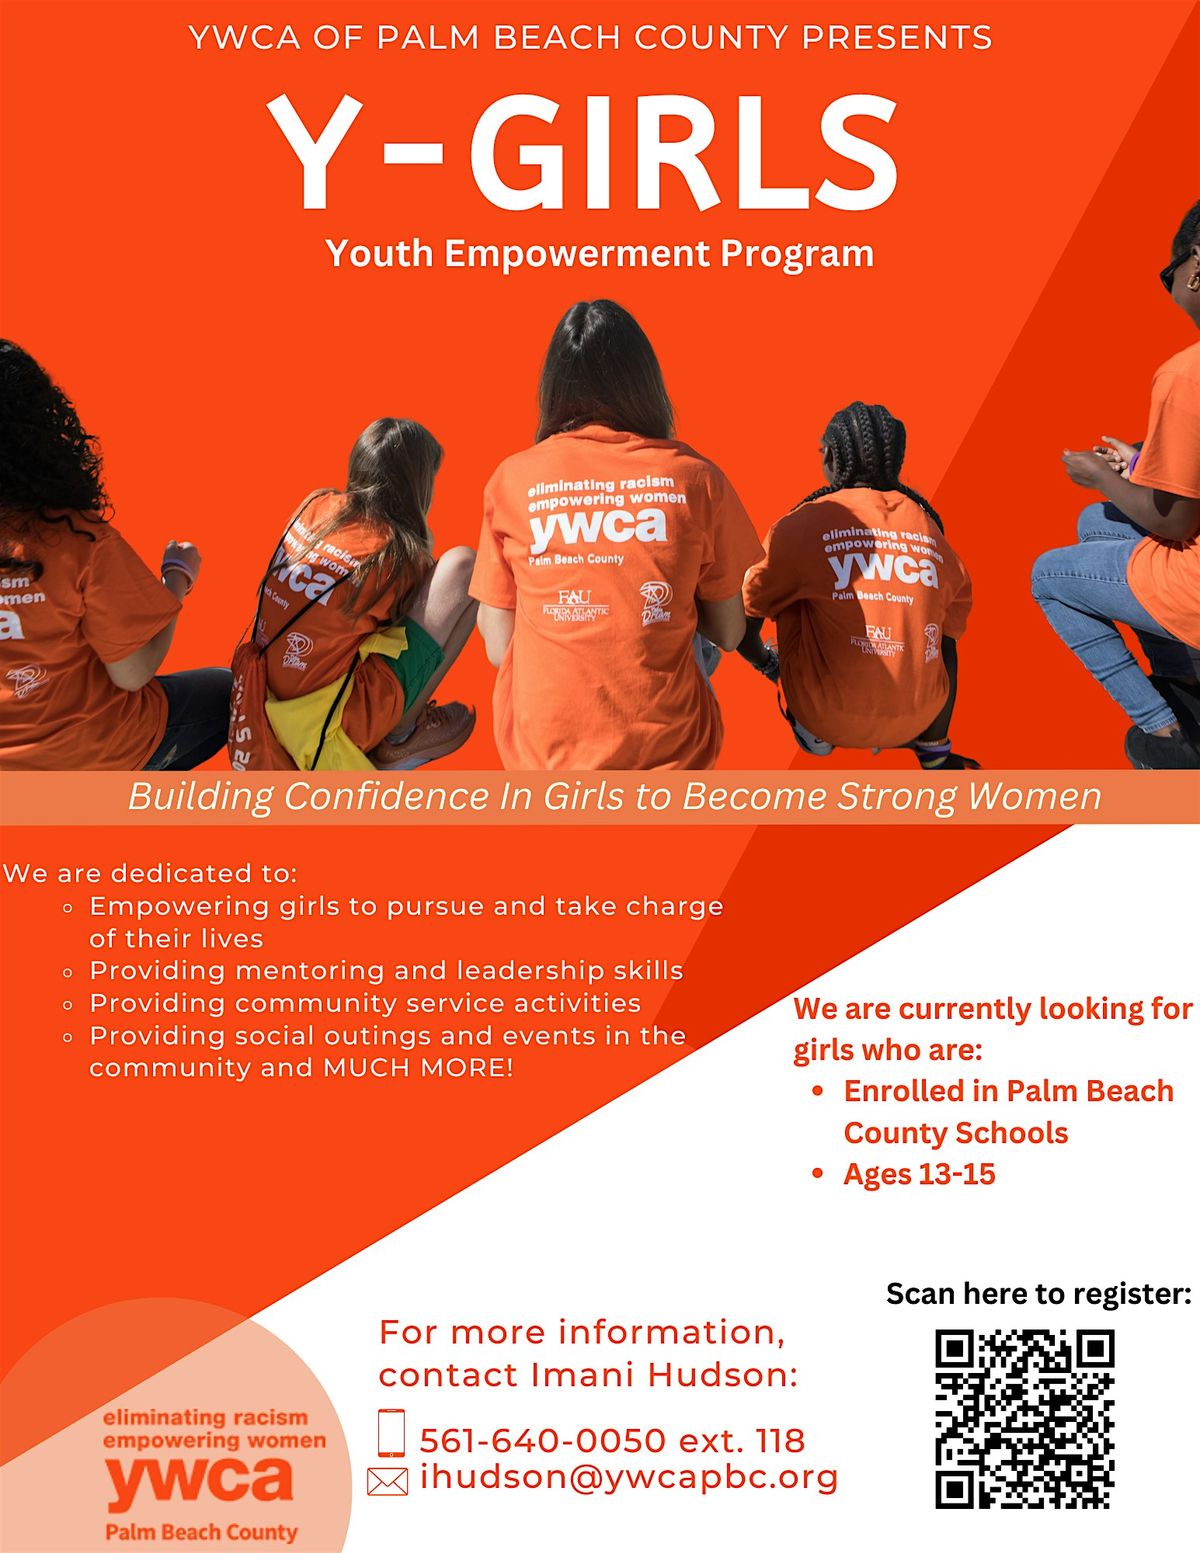 Y-Girls: Youth Empowerment Program Interest Meeting